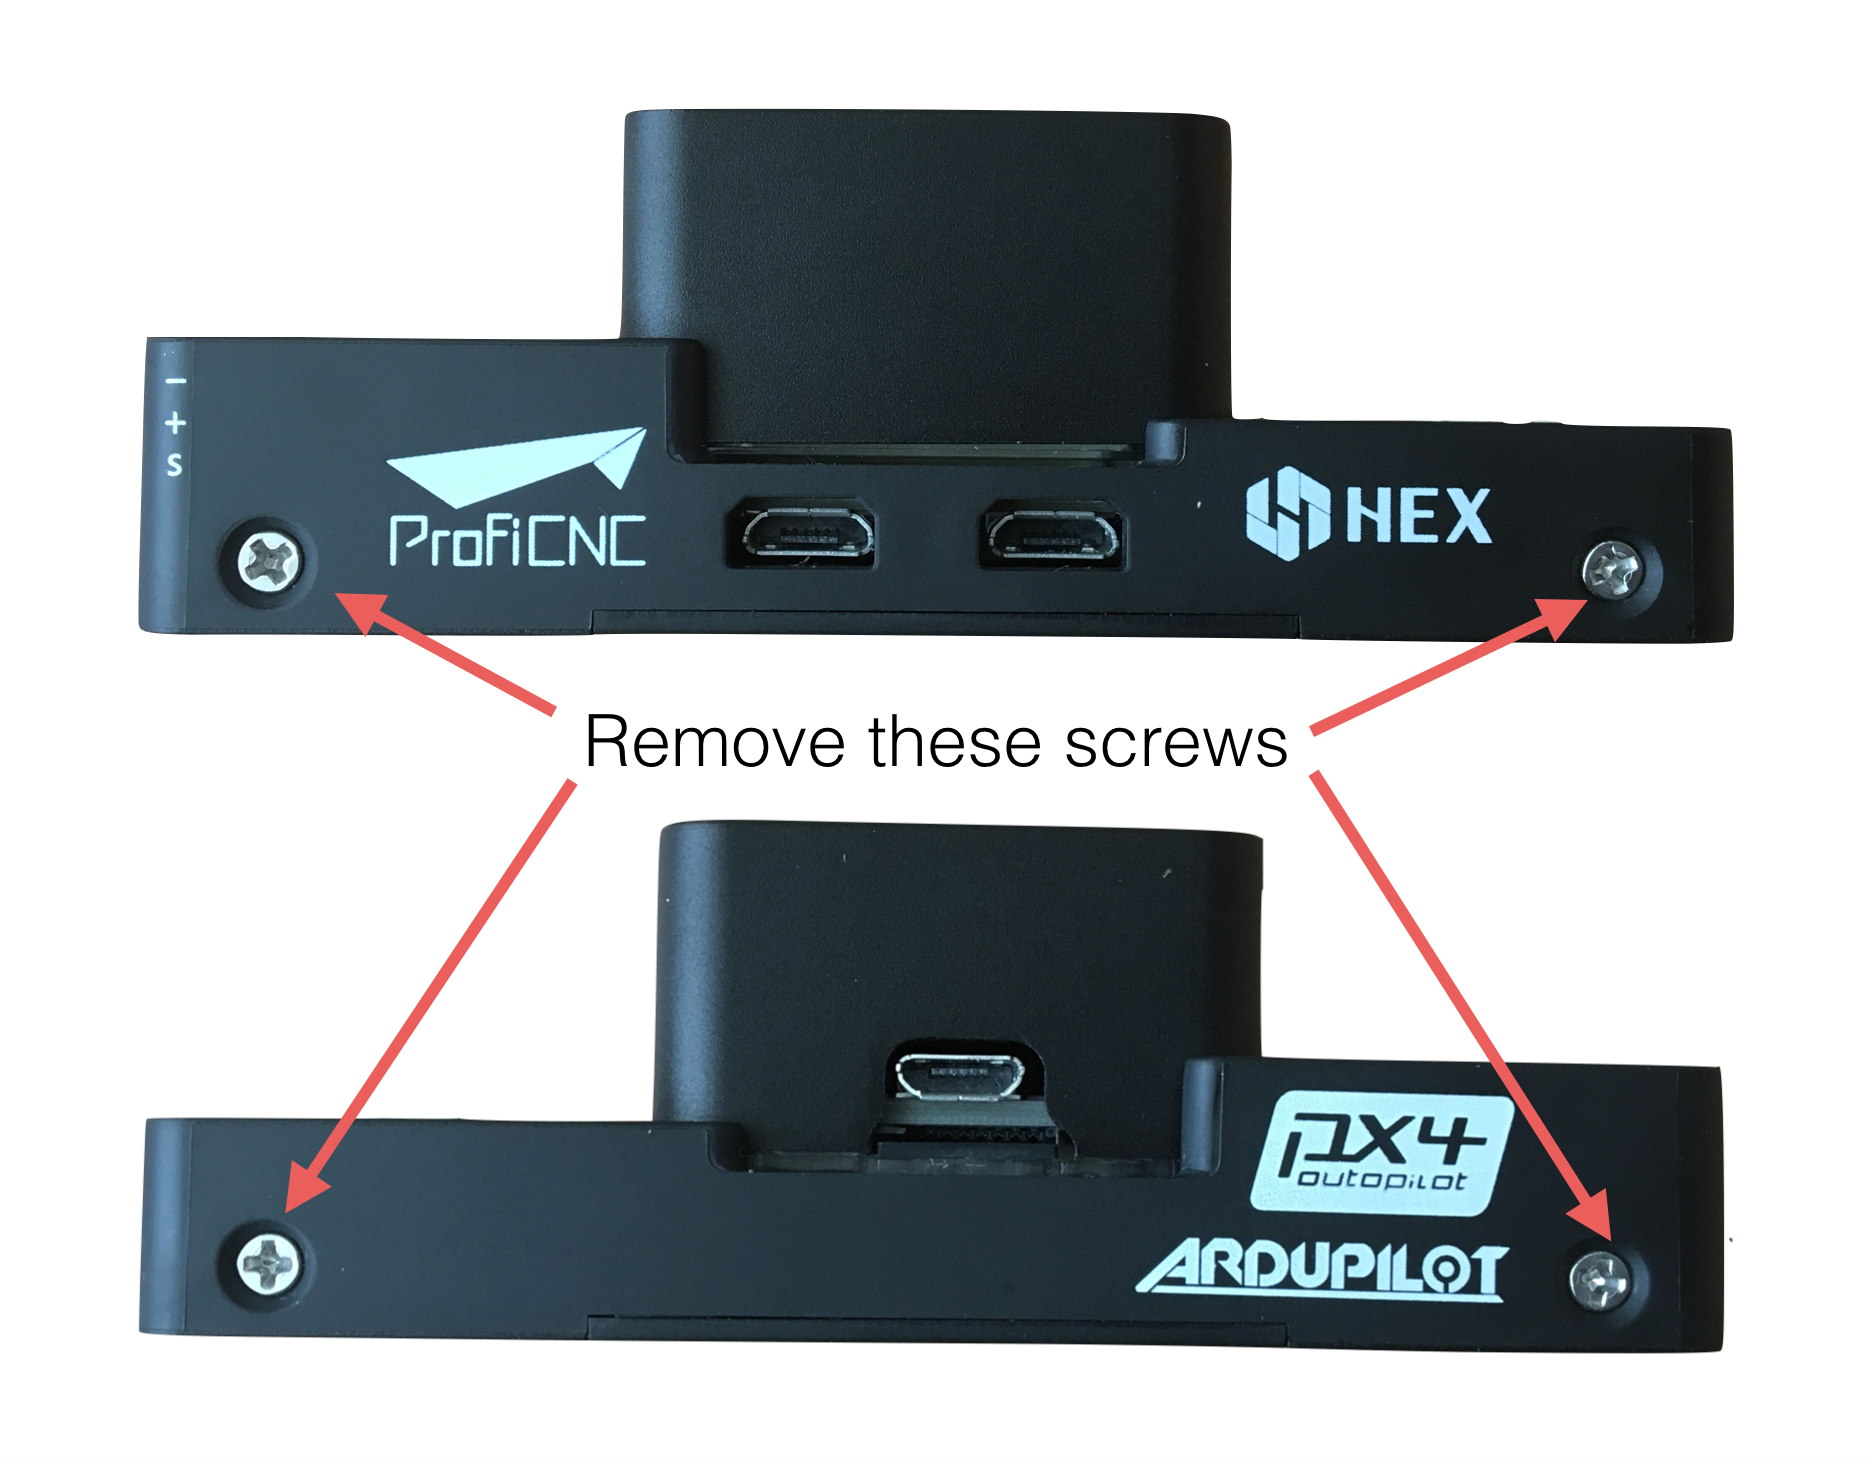 ../_images/intel-edison-pixhawk2-remove-screws.png